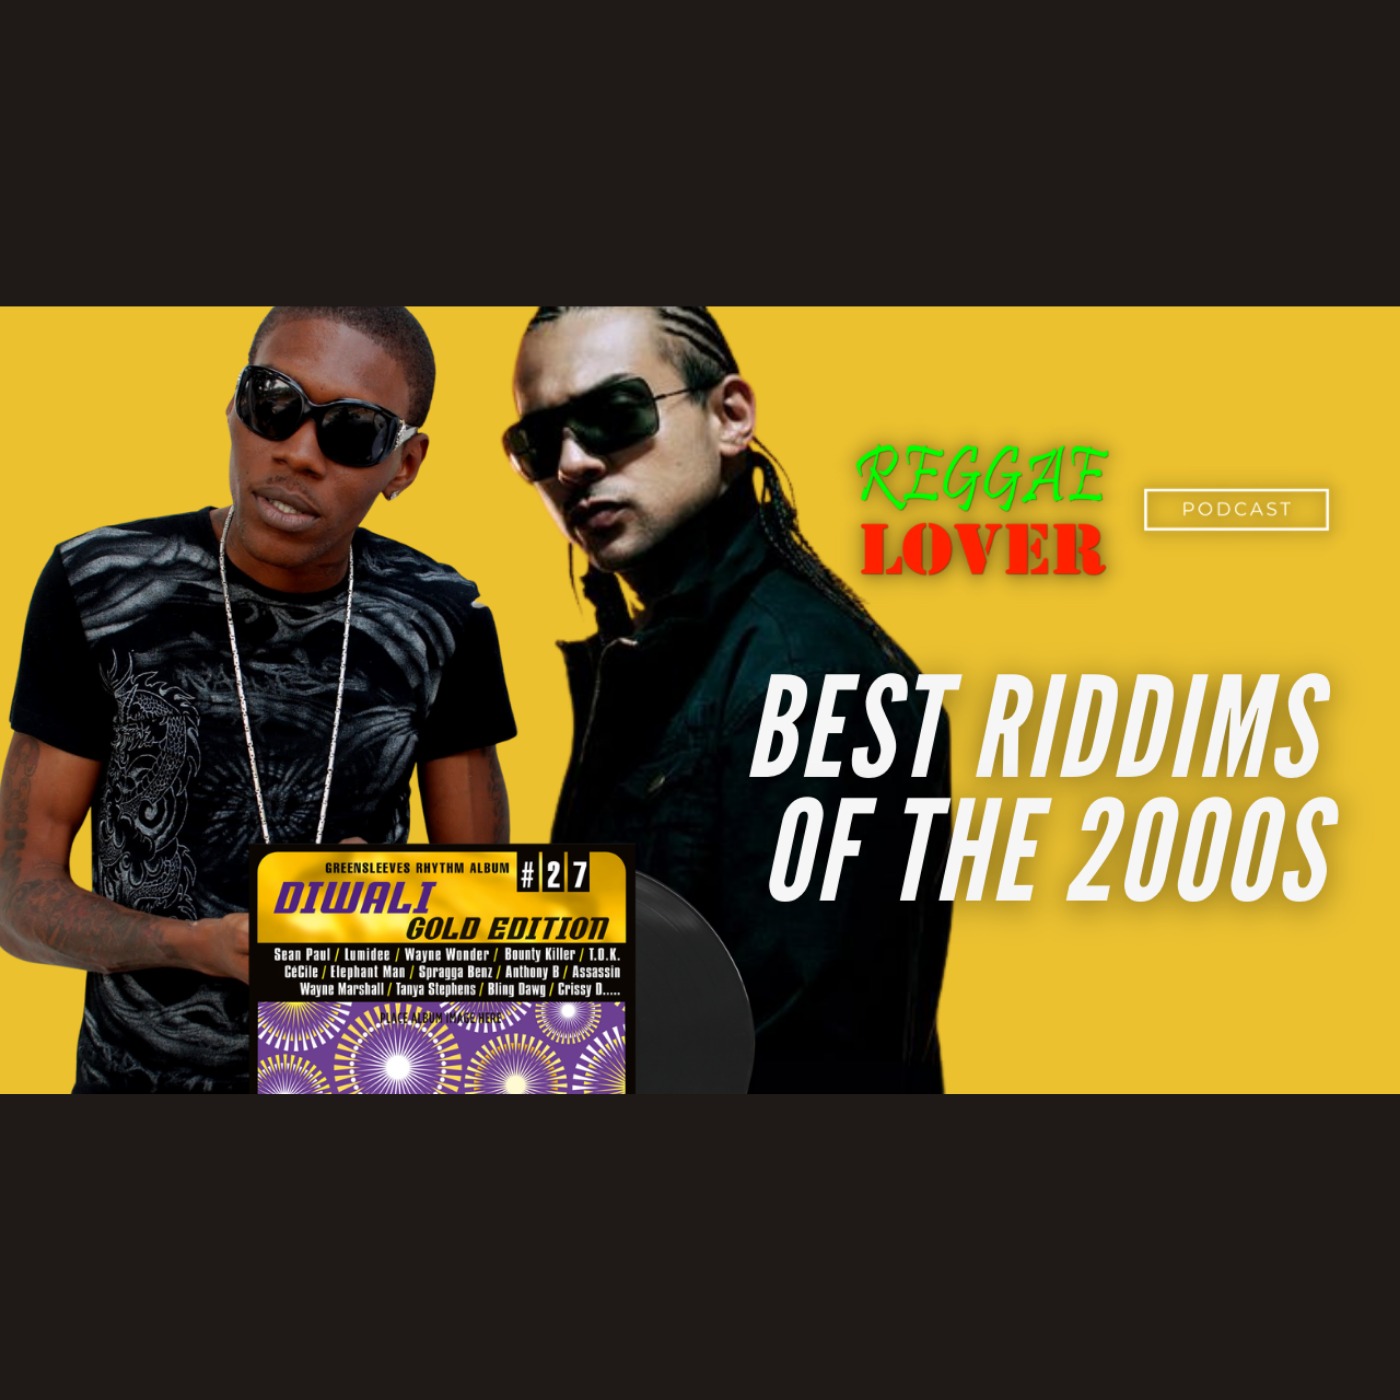 Best Big Reggae Dancehall Riddims in the 2000s